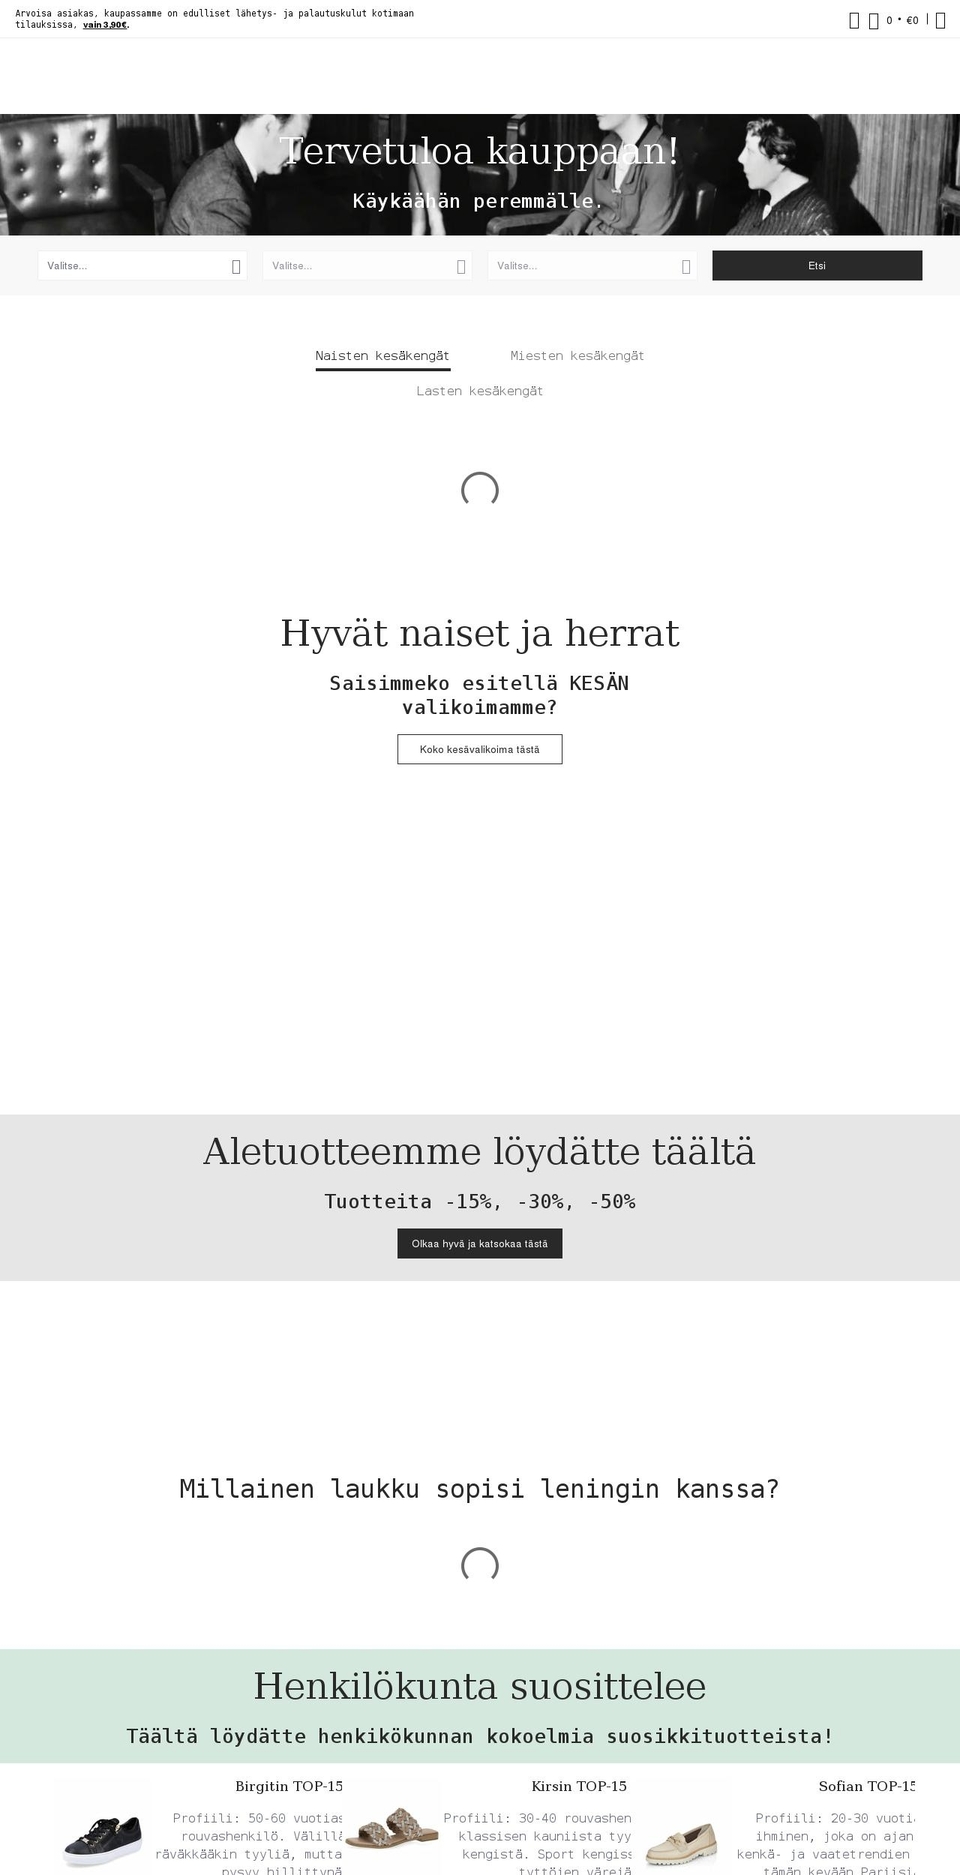 xn--ranuankenkjalaukku-utb.fi shopify website screenshot